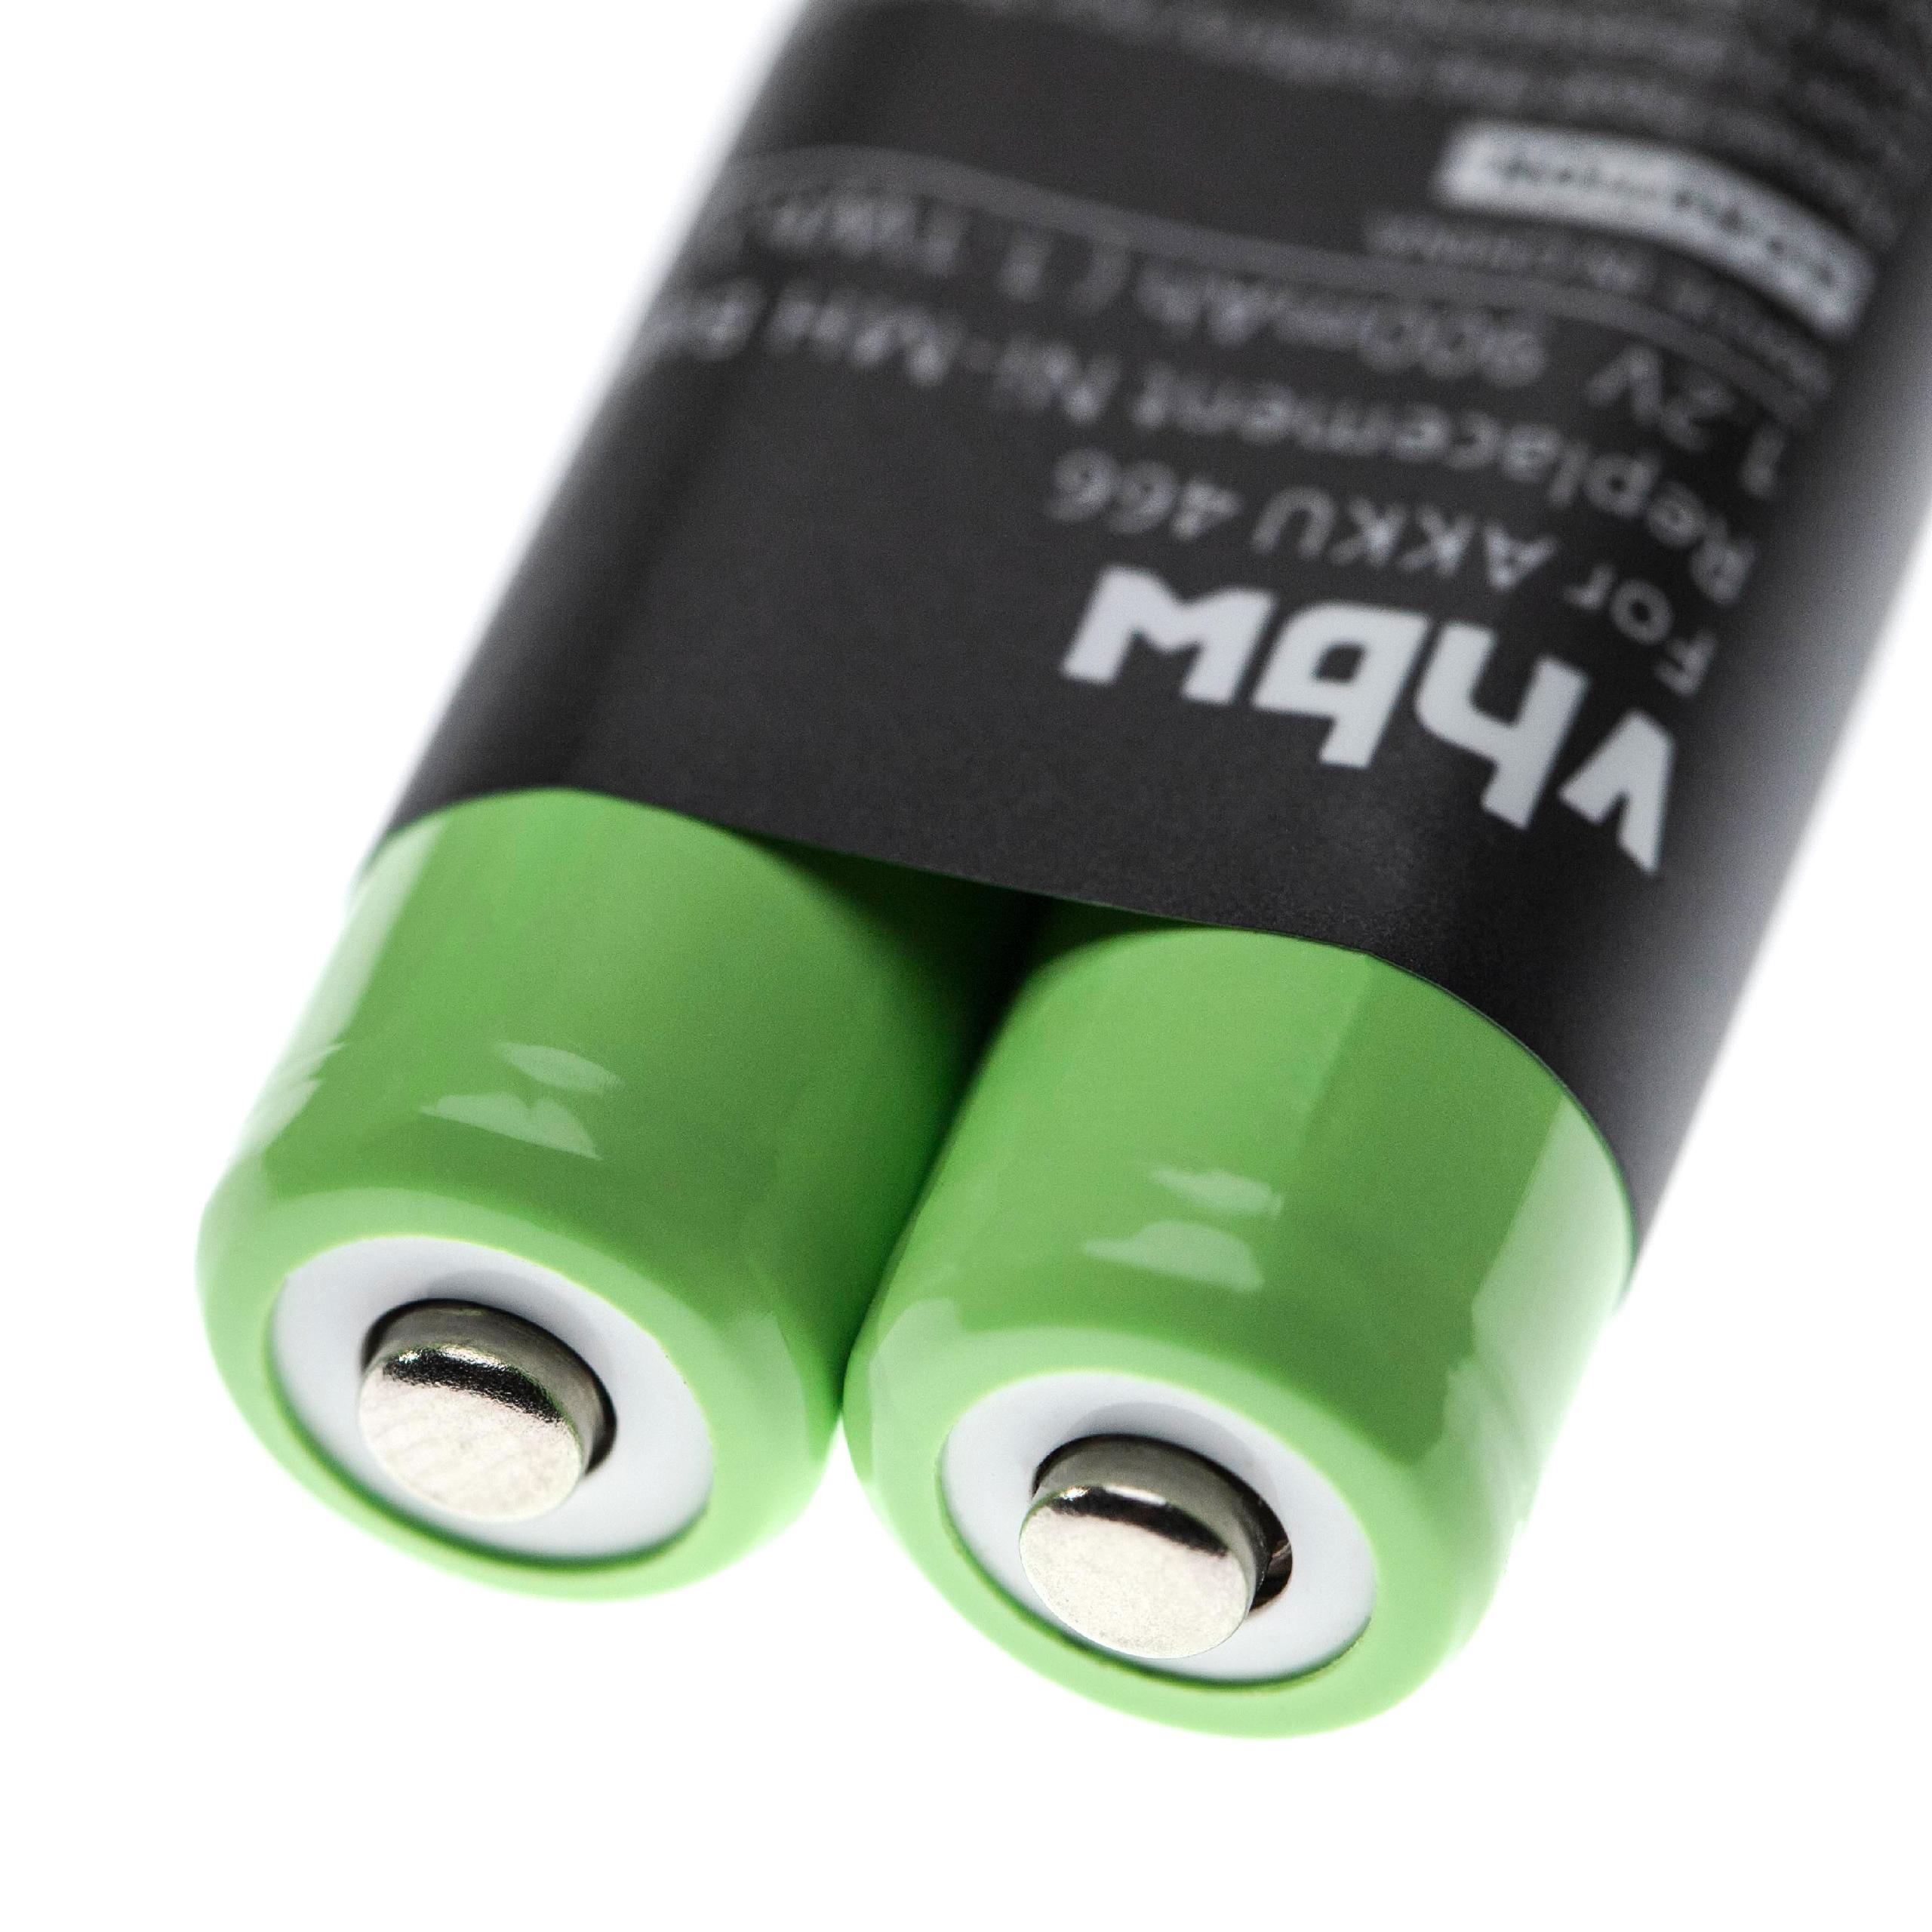 Batterie remplace Grundig GZS2100, 466 pour dictaphone - 900mAh 1,2V NiMH